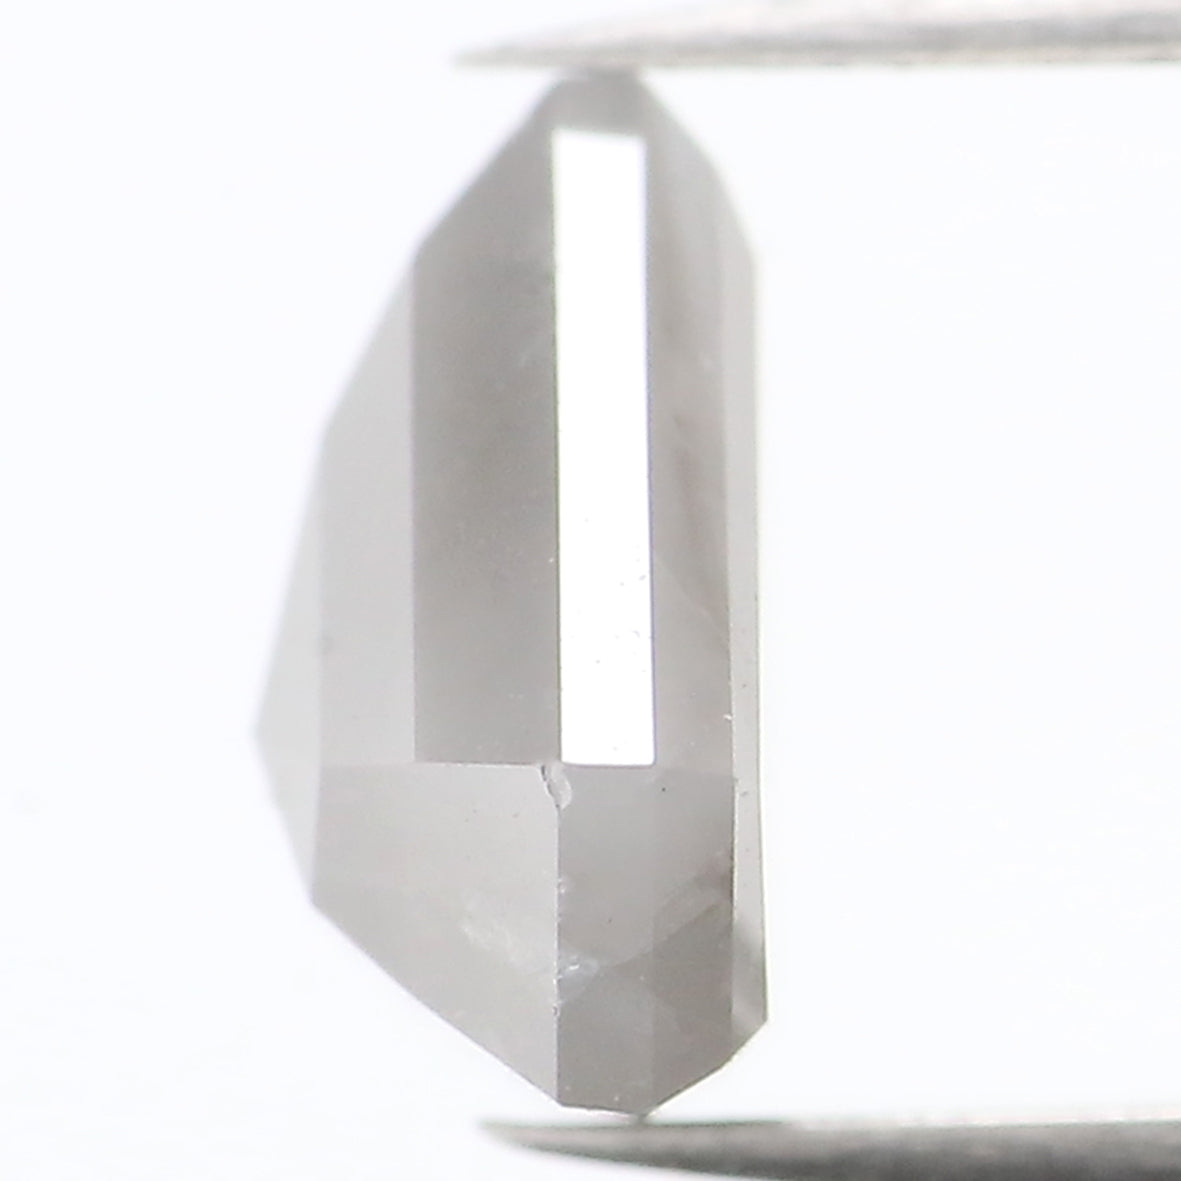 2.35 Ct Natural Loose Shield Diamond Gray Color Shield Cut Diamond 7.90 MM Natural Loose Diamond Gray Color Shield Rose Cut Diamond QL906